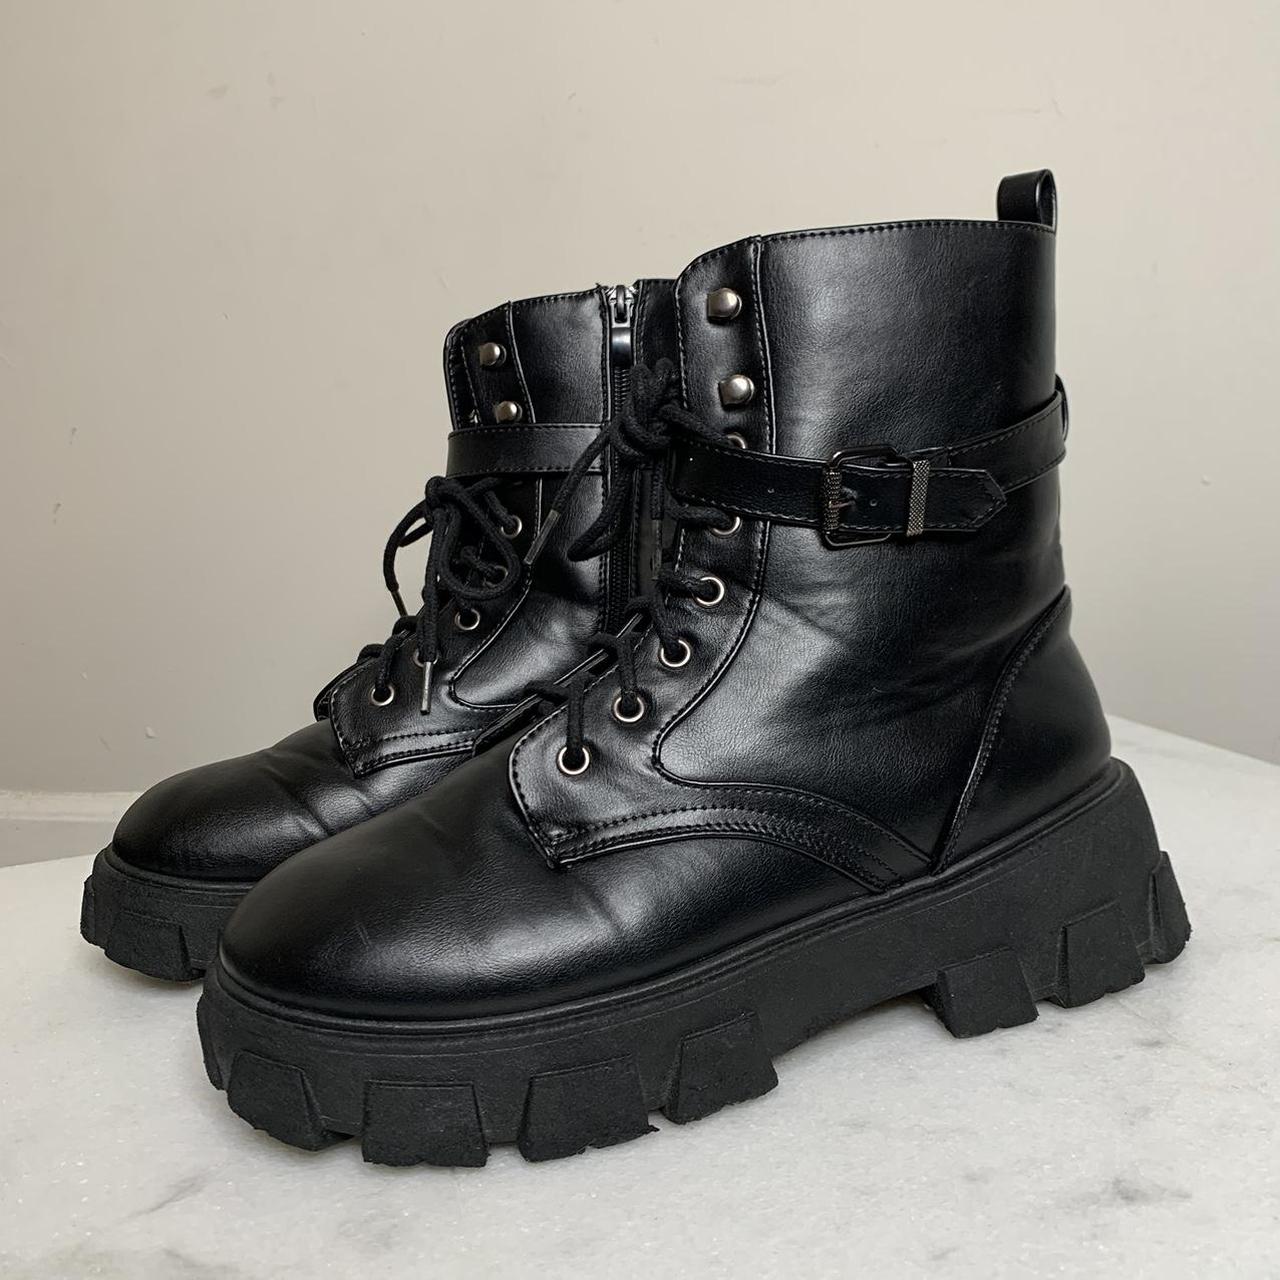 black platform boots gently used, flaws shown in... - Depop